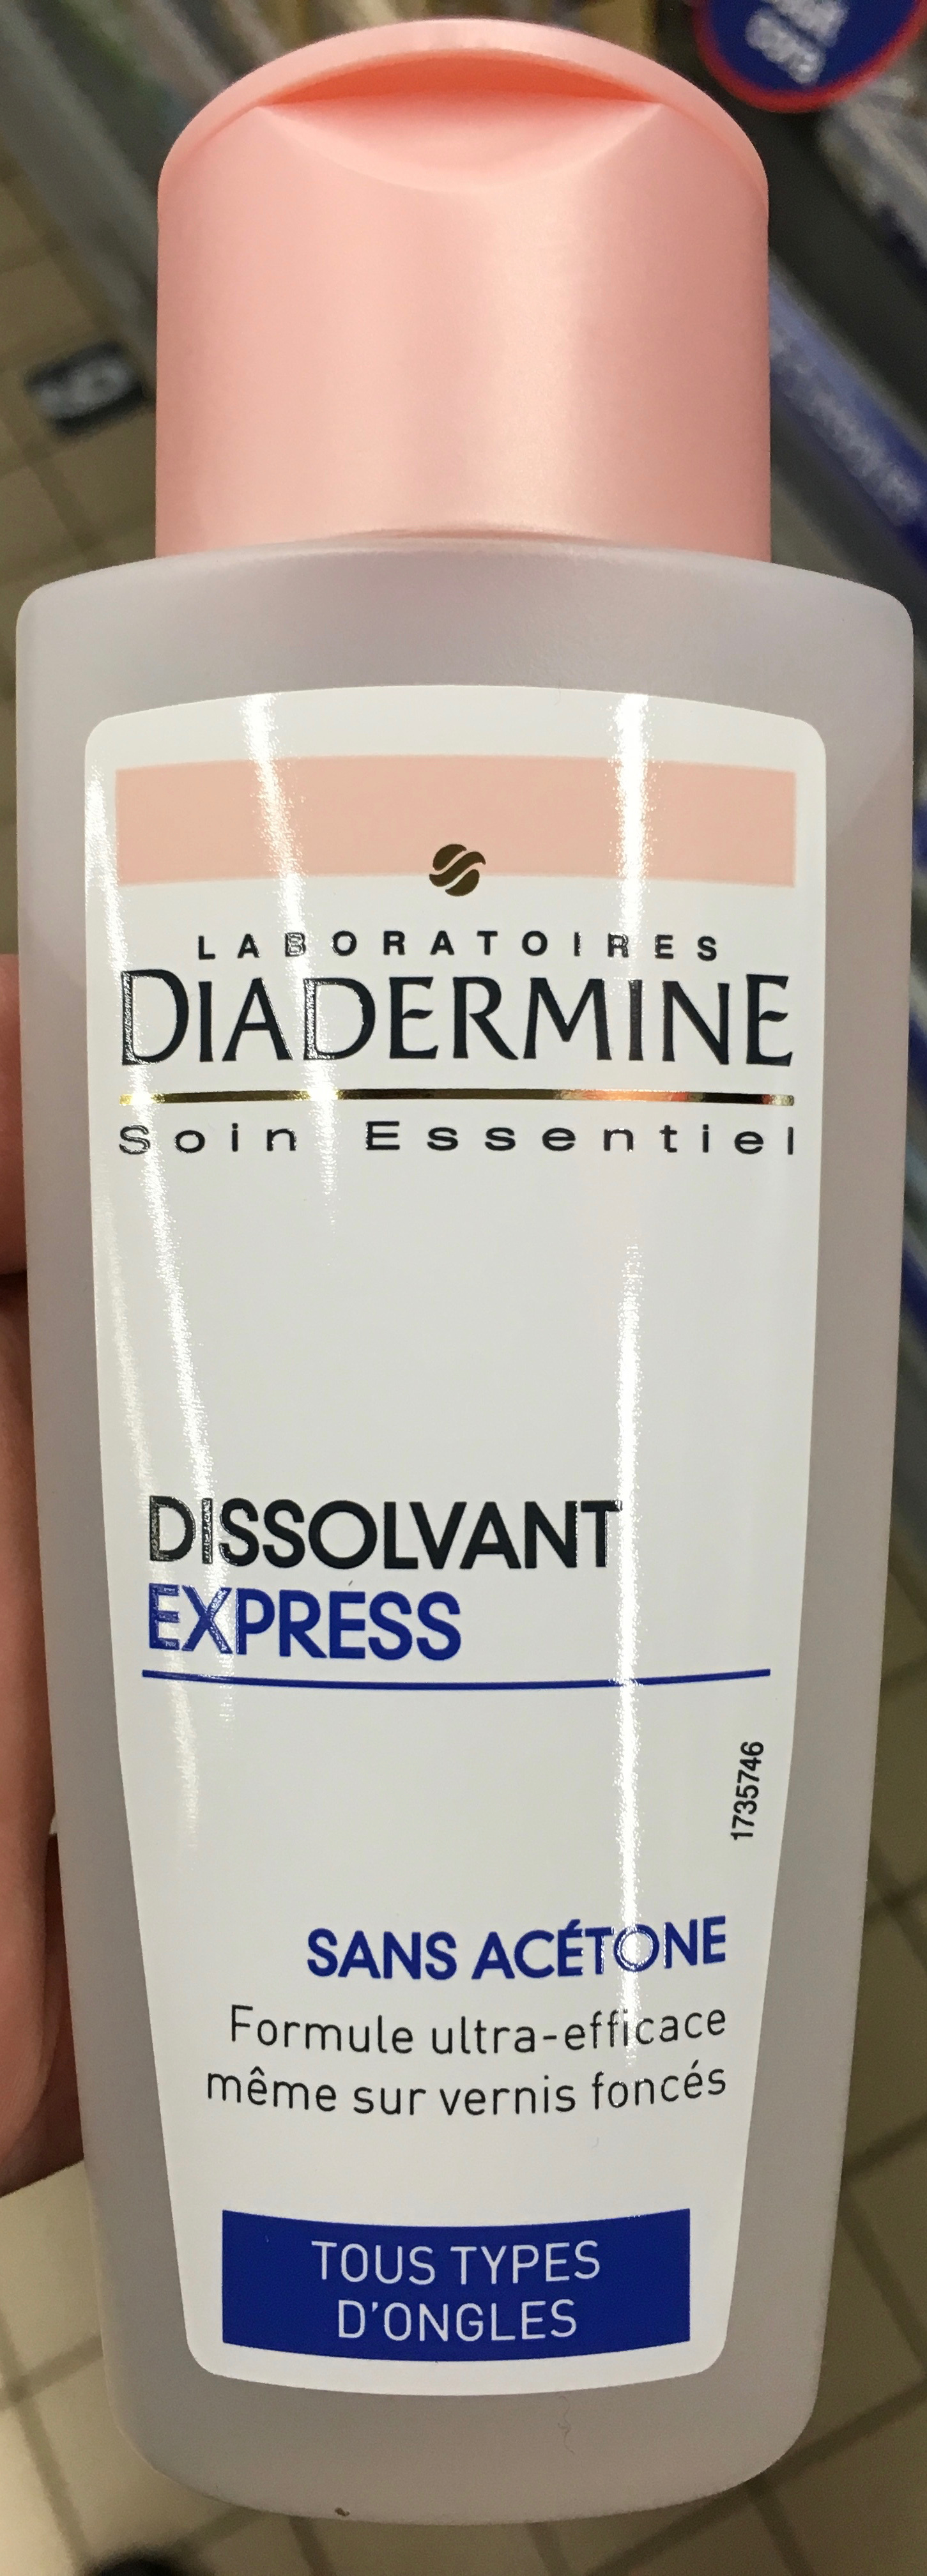 Dissolvant Express sans acétone - Product - fr